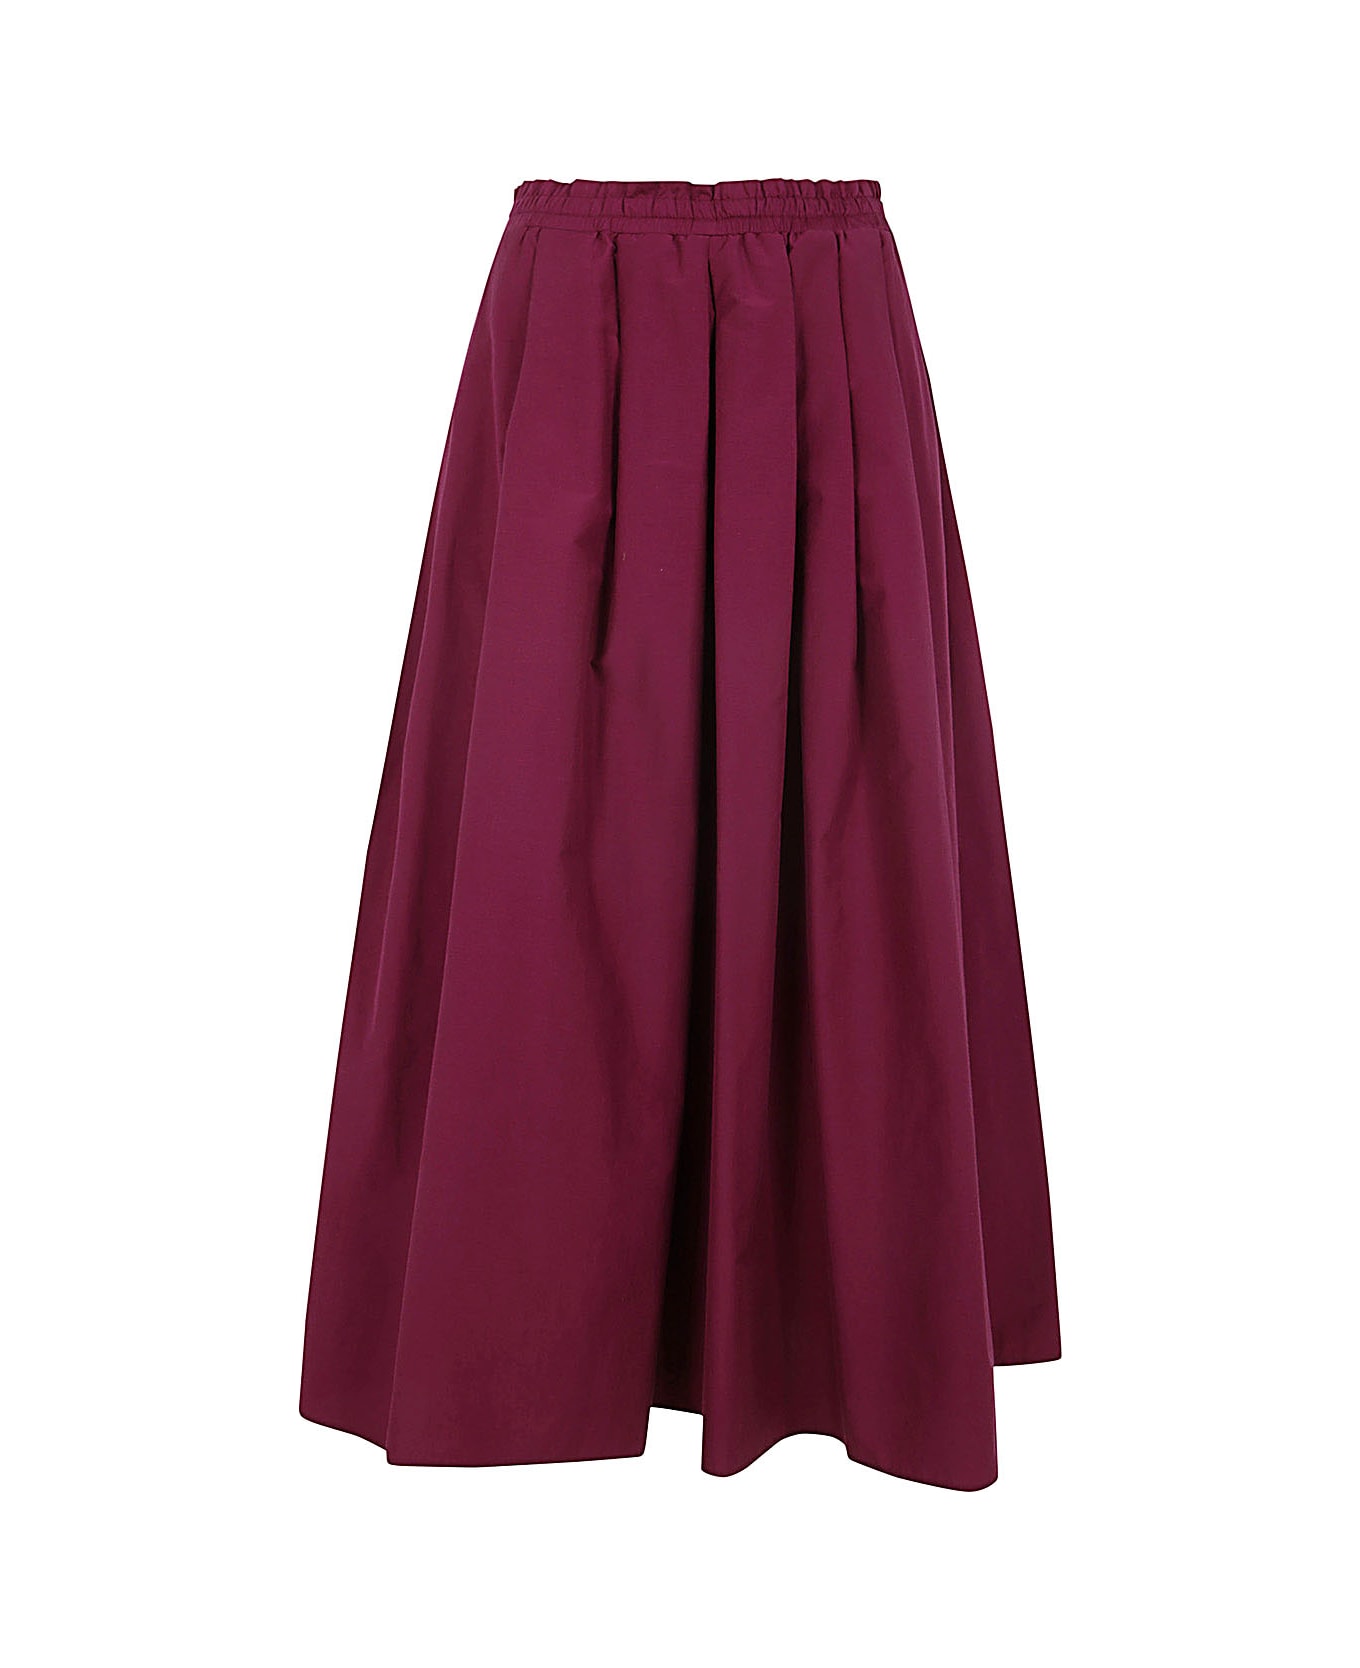 Antonelli Iglesias Skirt - Bordeaux スカート